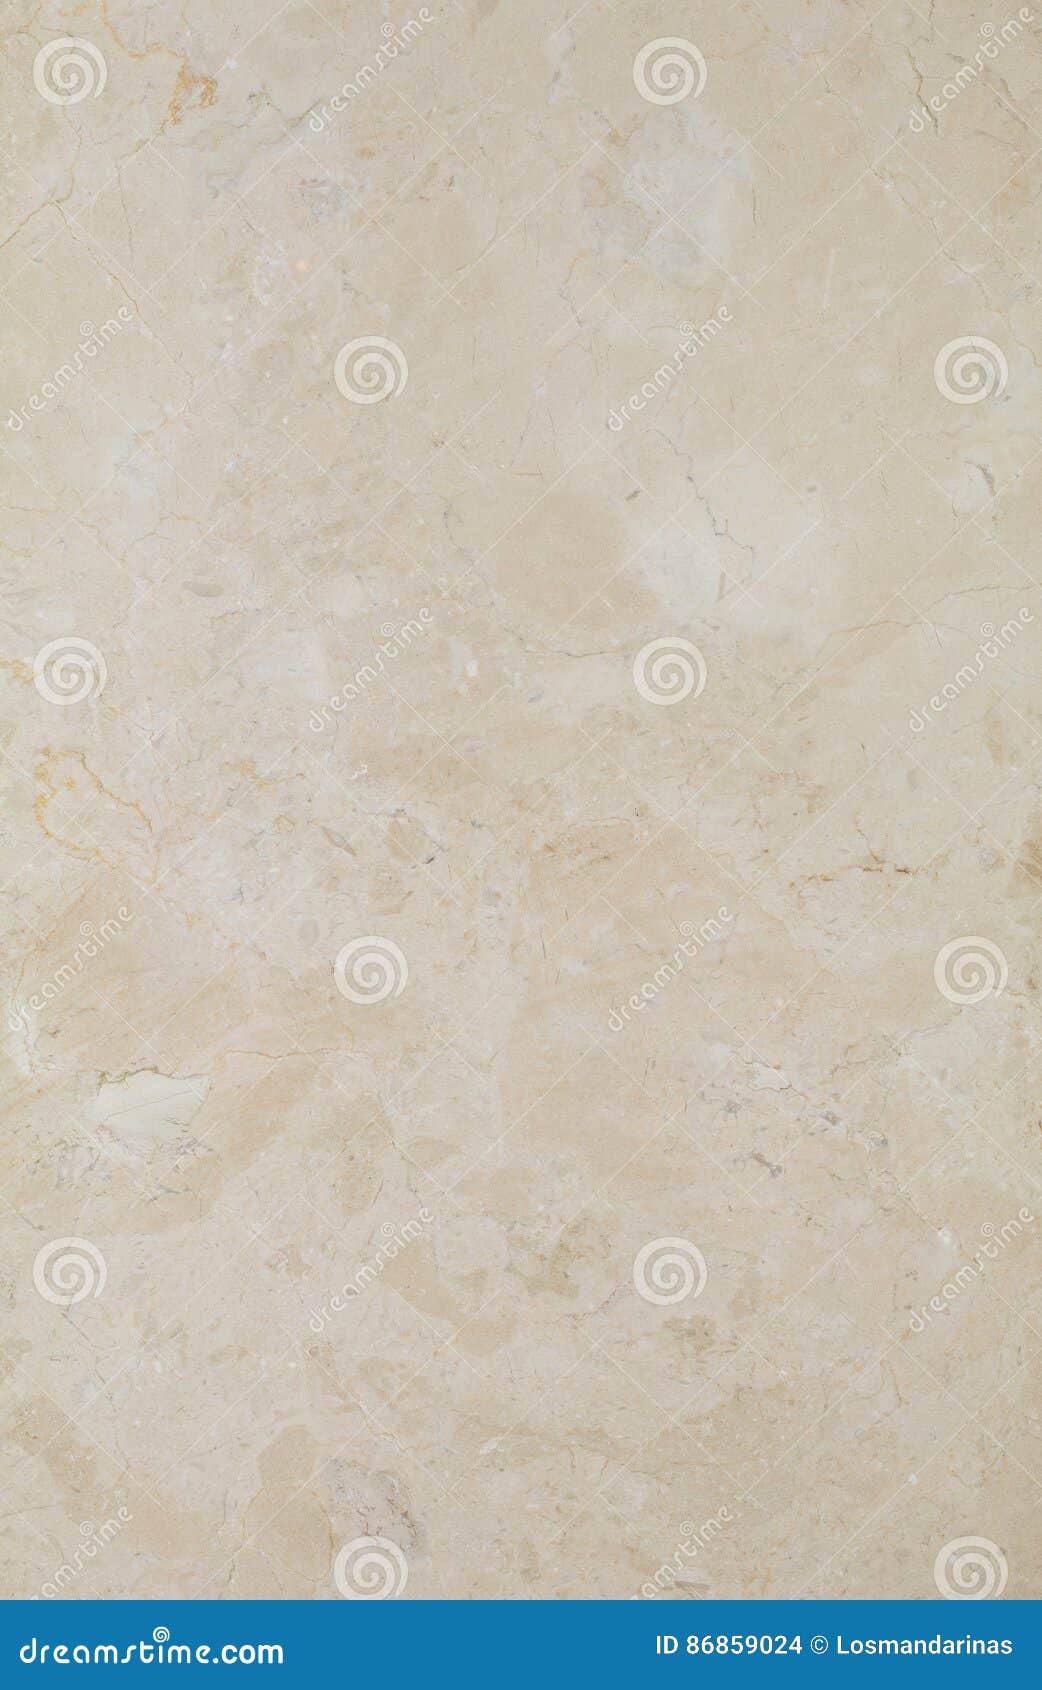 natural crema marfil marble texture